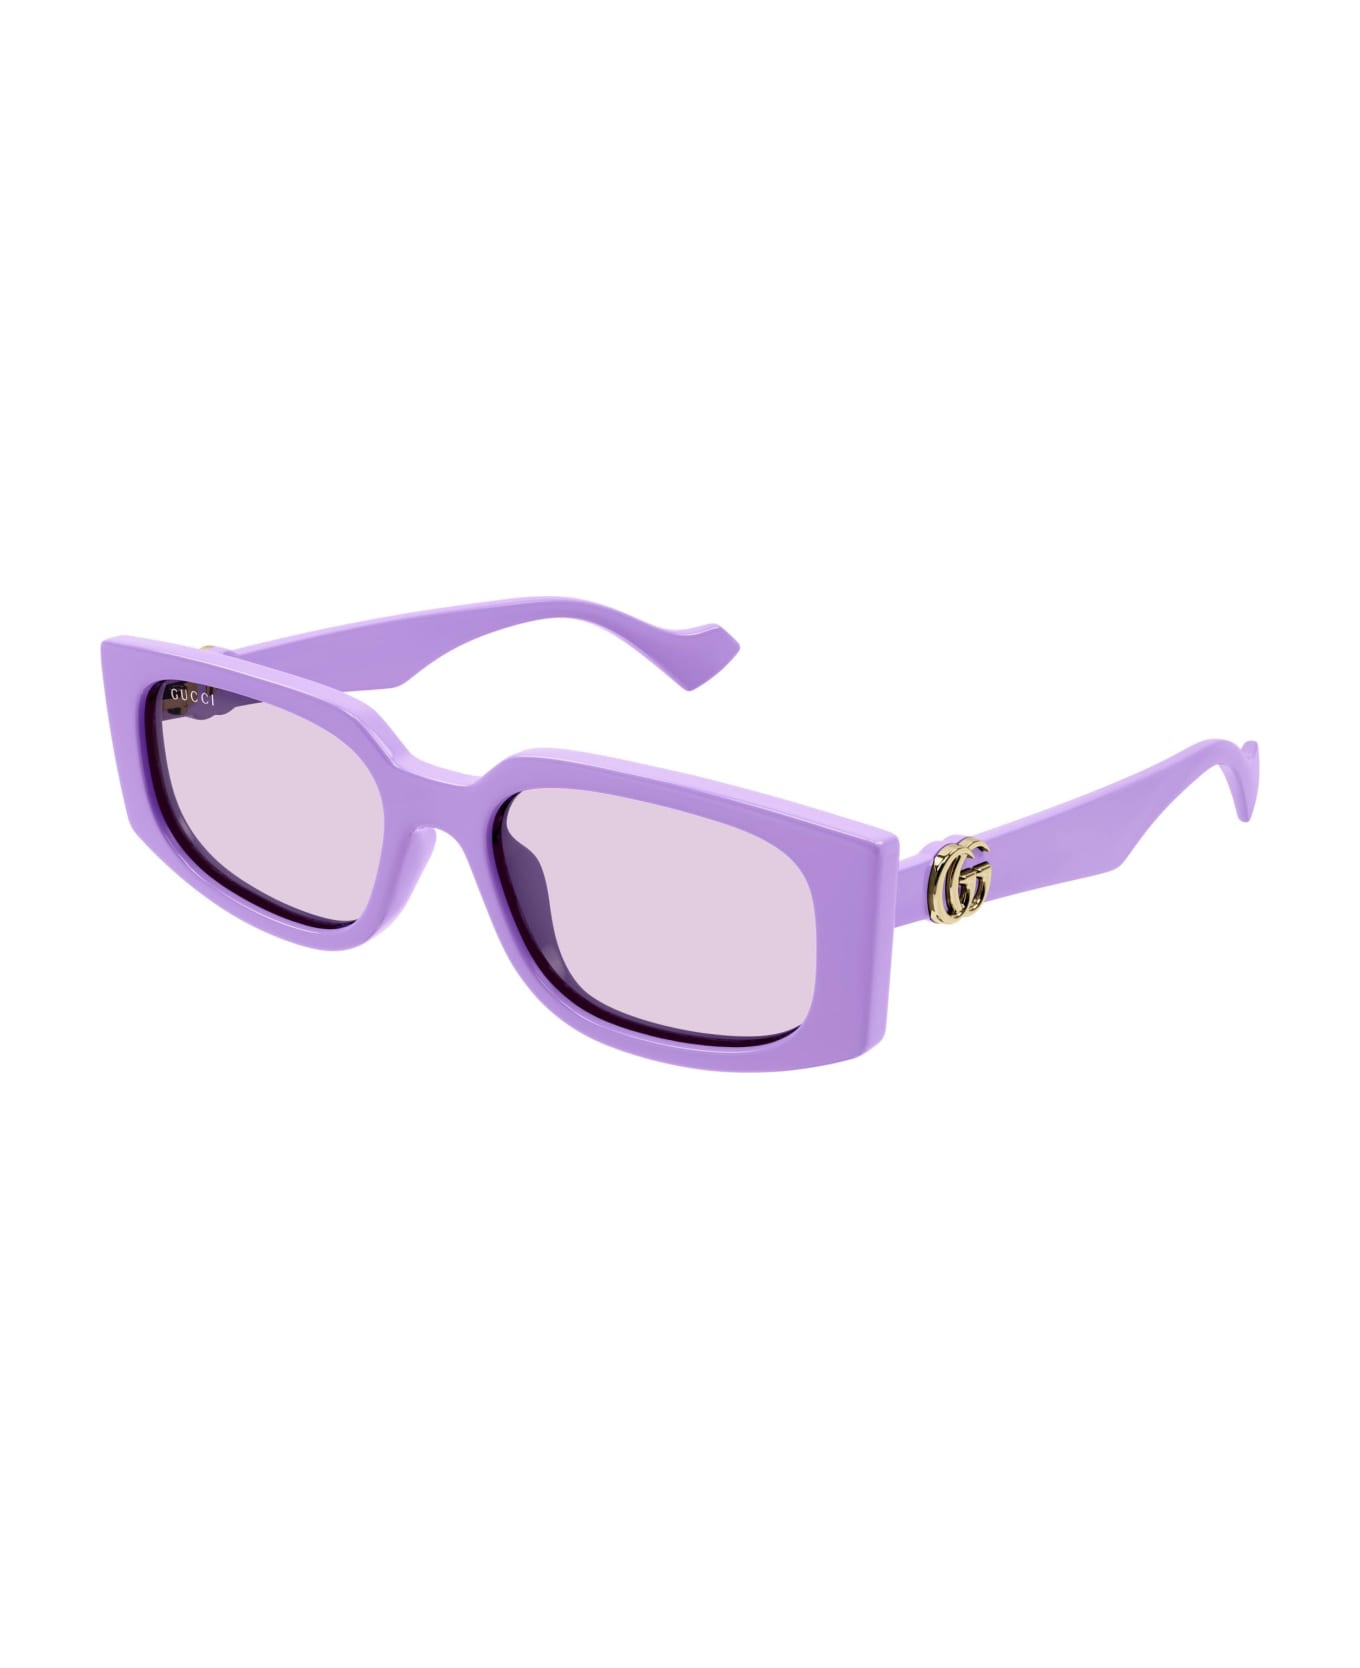 Gucci Eyewear Sunglasses - Viola/Viola サングラス